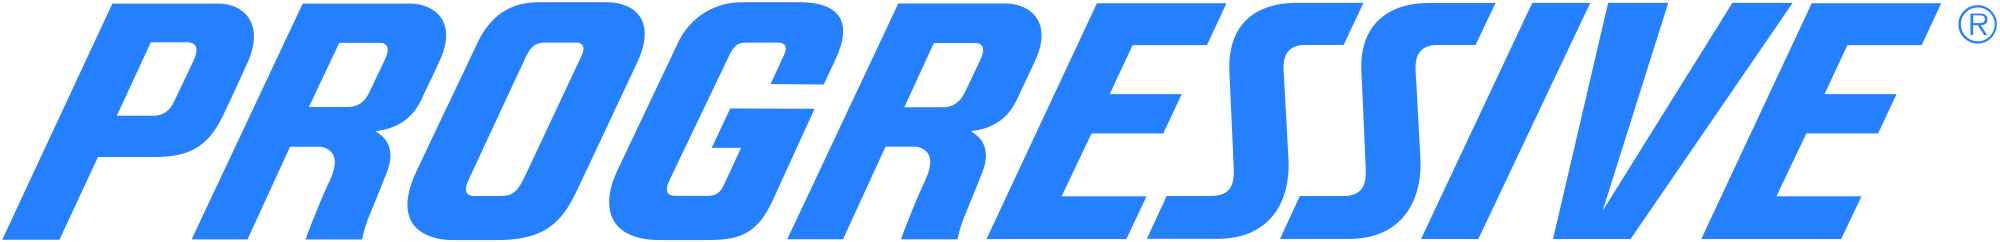 image-771277-Progressive-logo.png